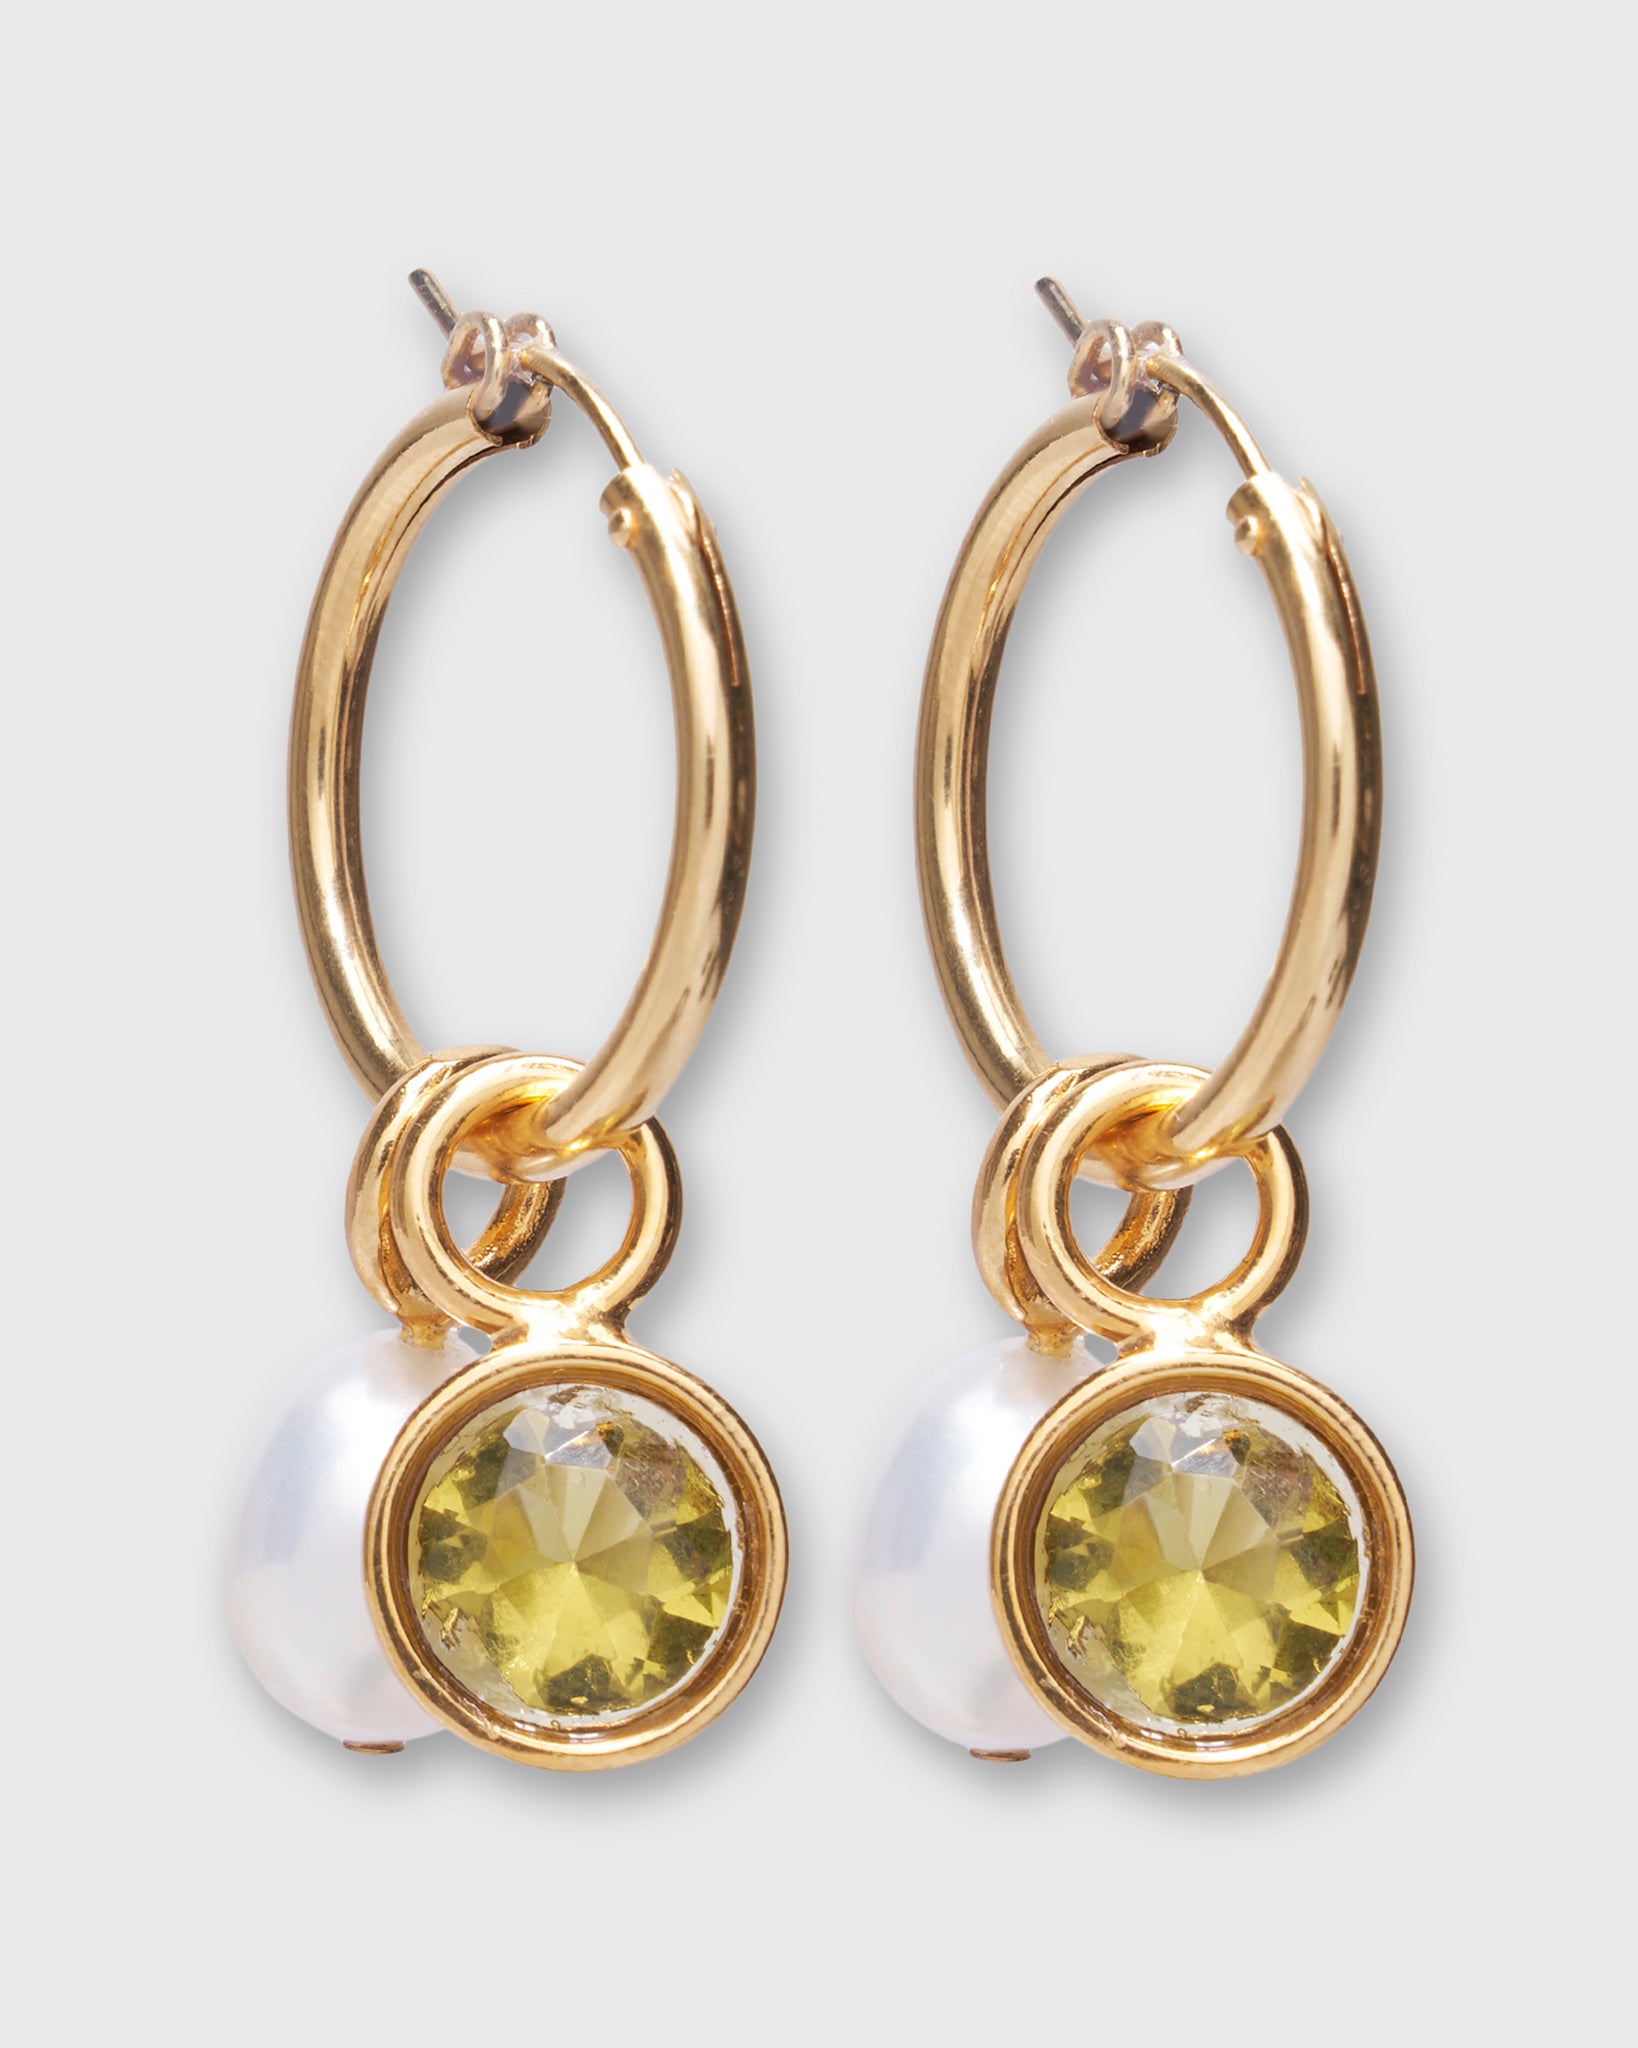 Waltz Hoop Earrings in Olive